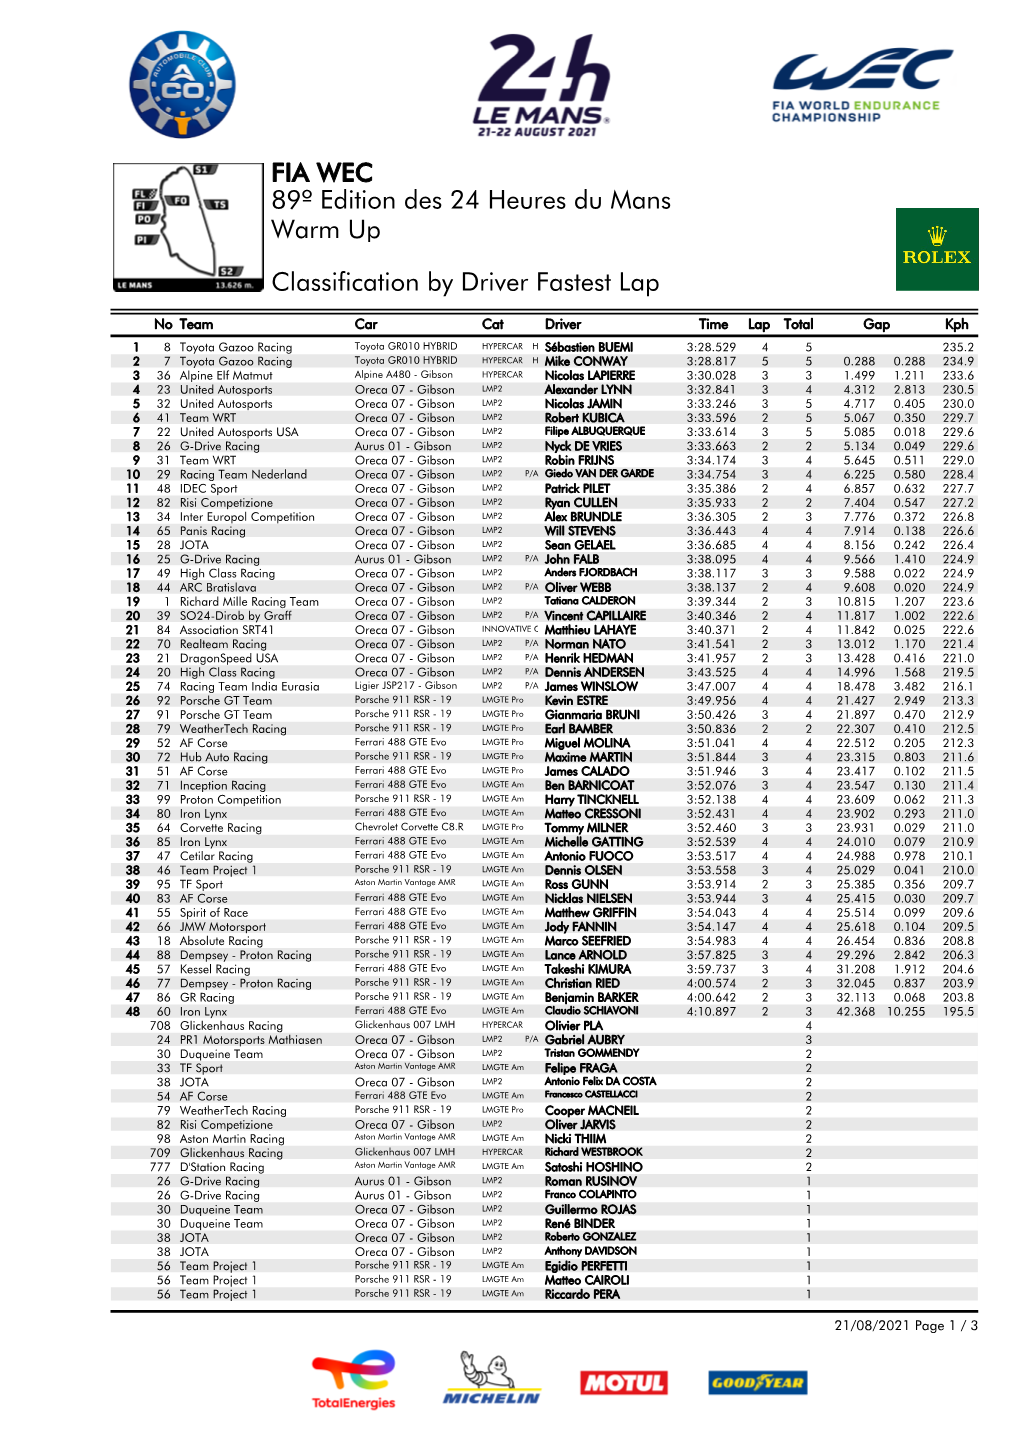 Classification by Driver Fastest Lap Warm up 89º Edition Des 24